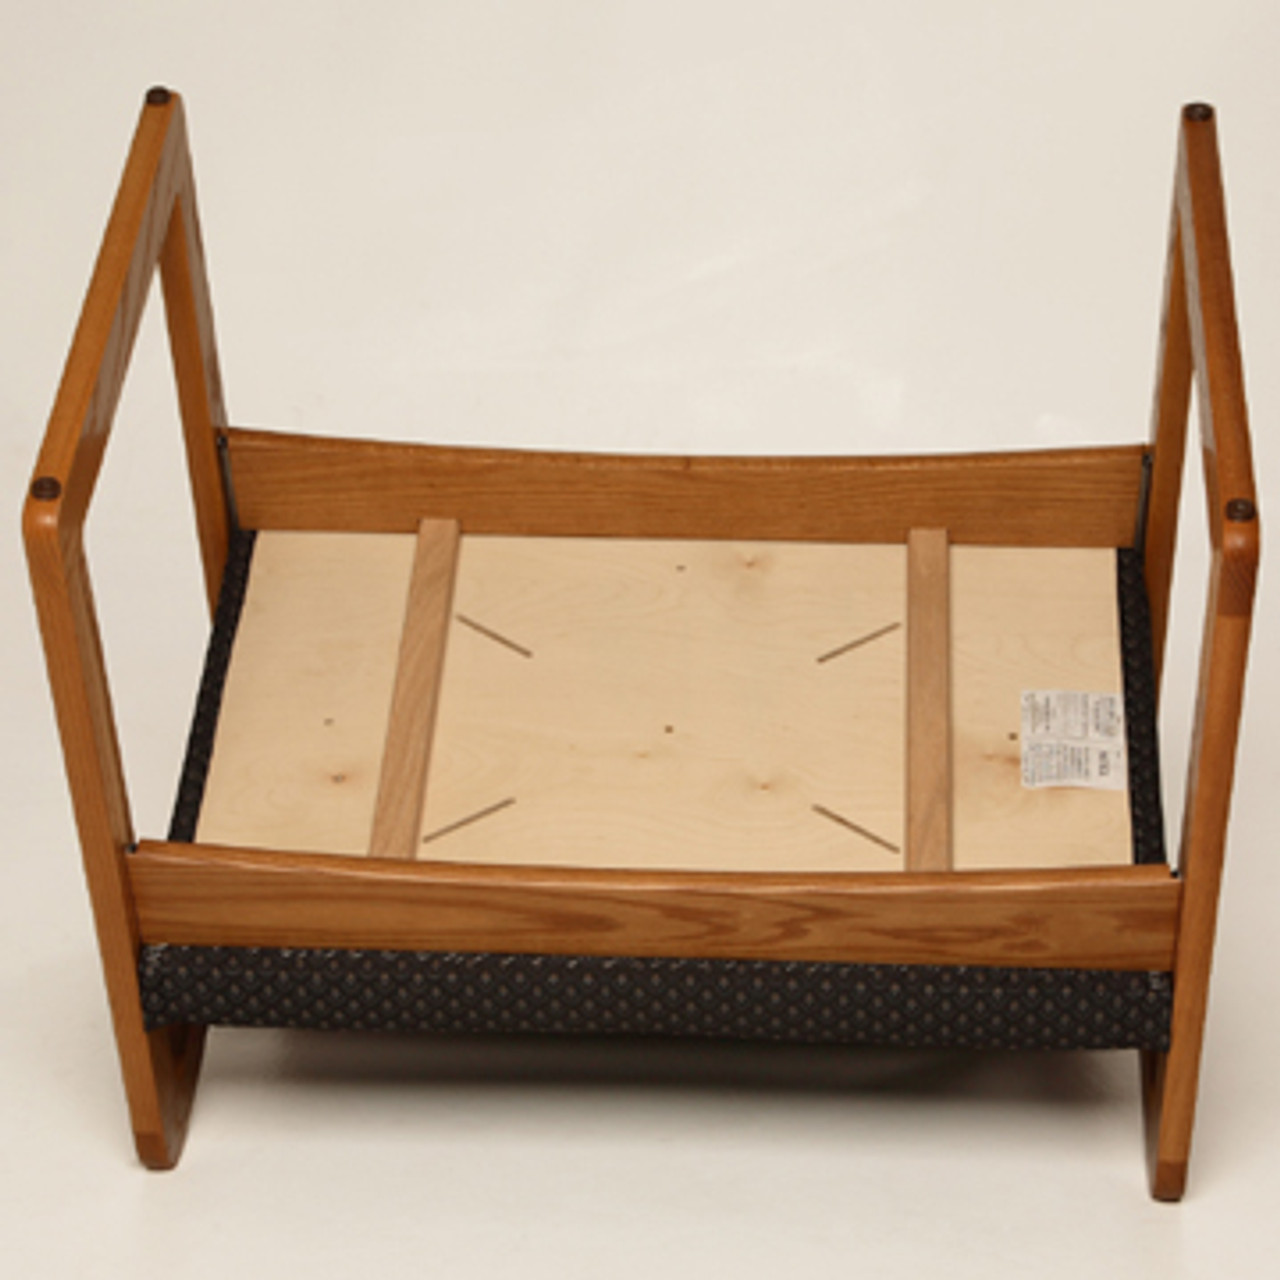 Wooden Mallet Valley Collection Three Seat Bariatric Chair, Center Arms, Standard Leg, Powder Blue, Medium Oak